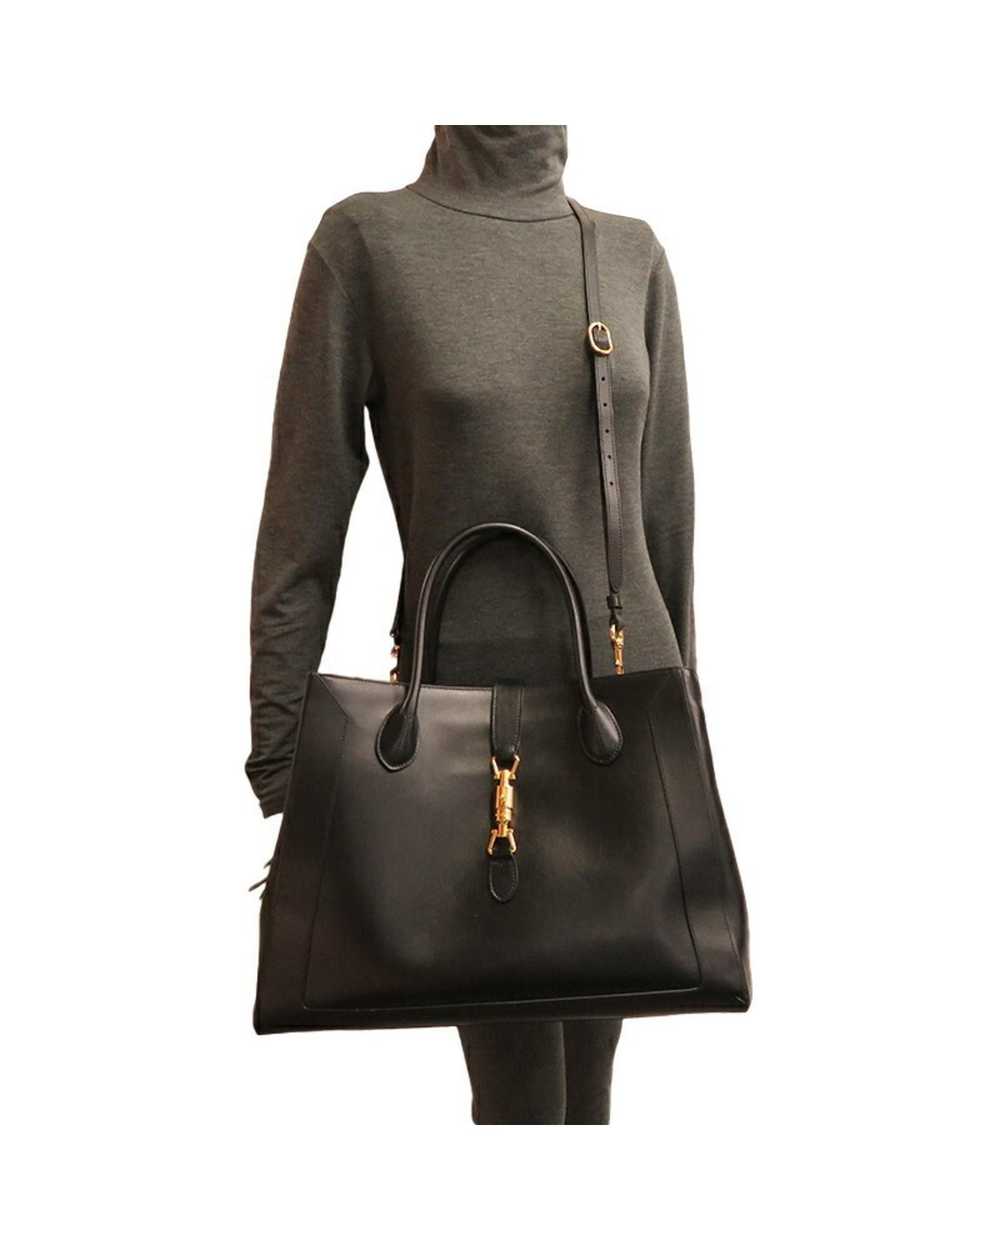 Gucci Timeless Black Leather Handbag - image 9